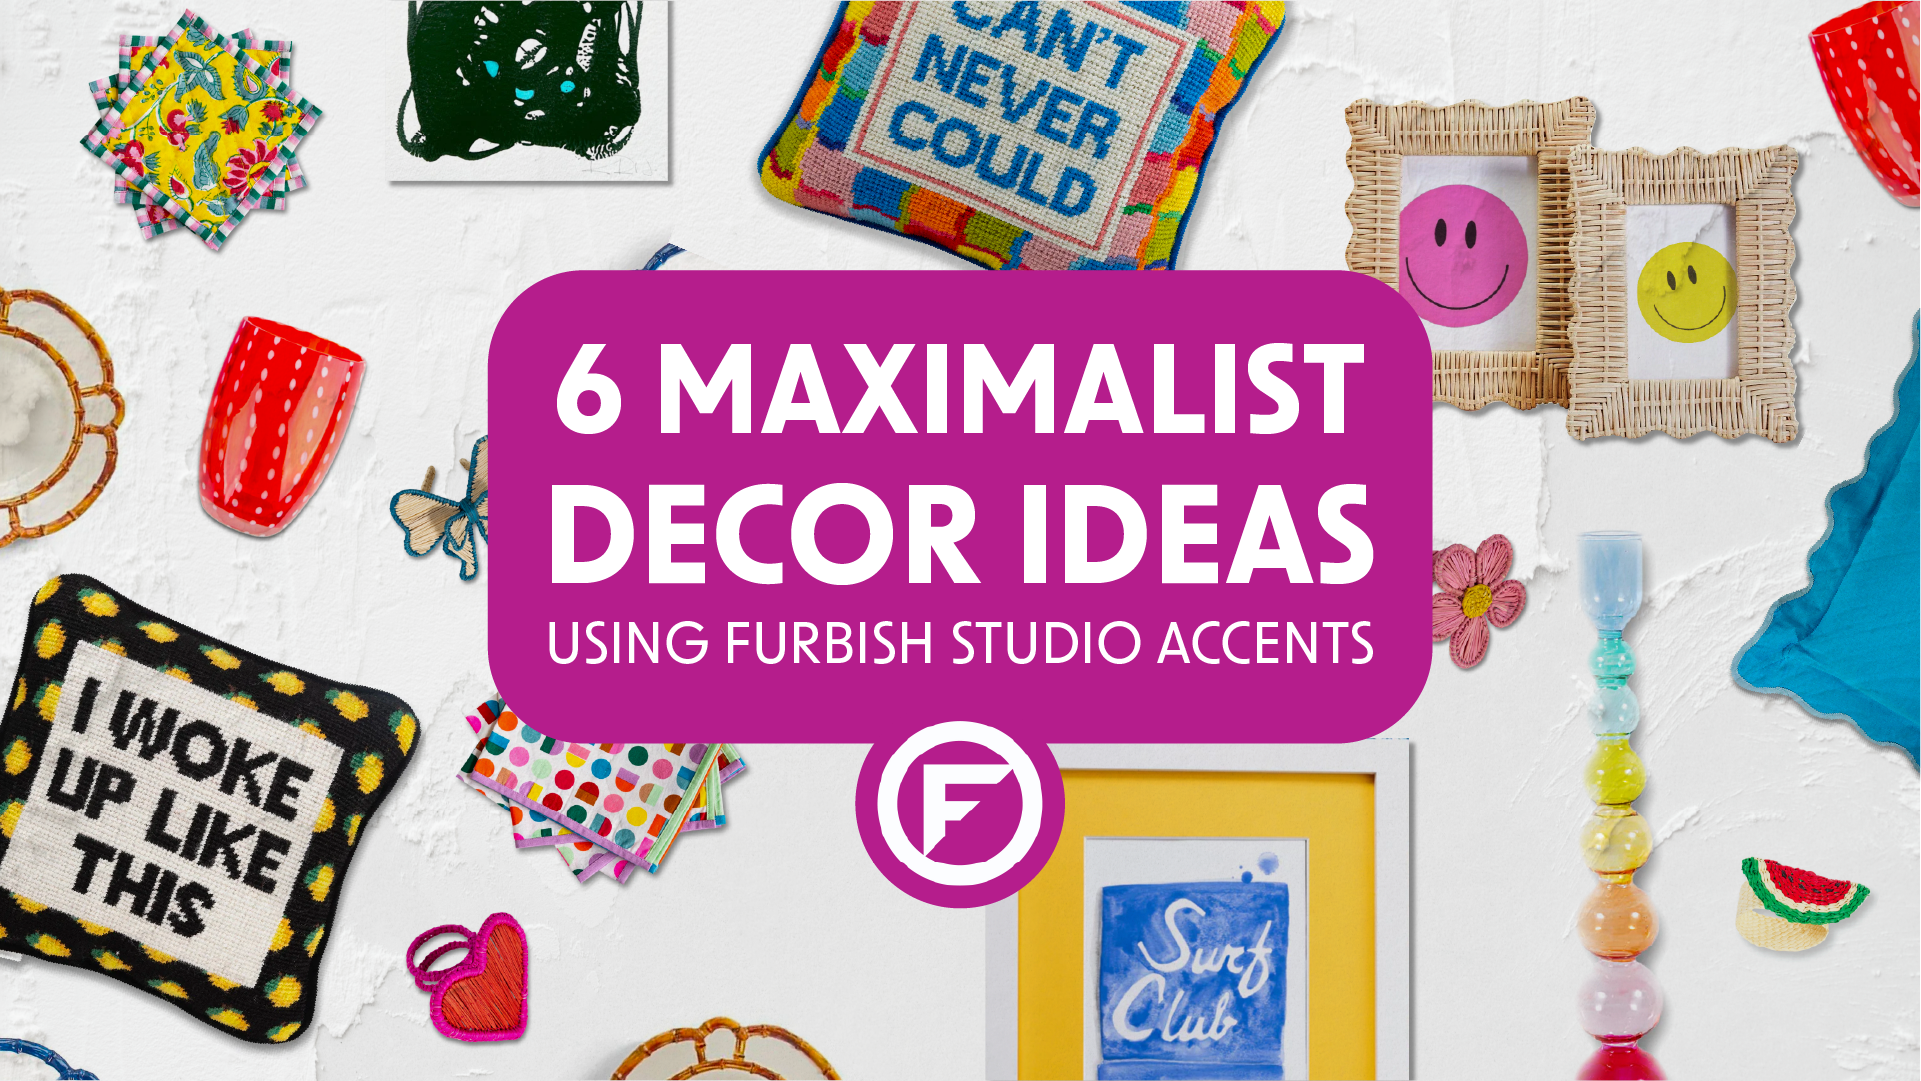 6 Maximalist Decor Ideas Using Furbish Studio Home Accents - Floorily